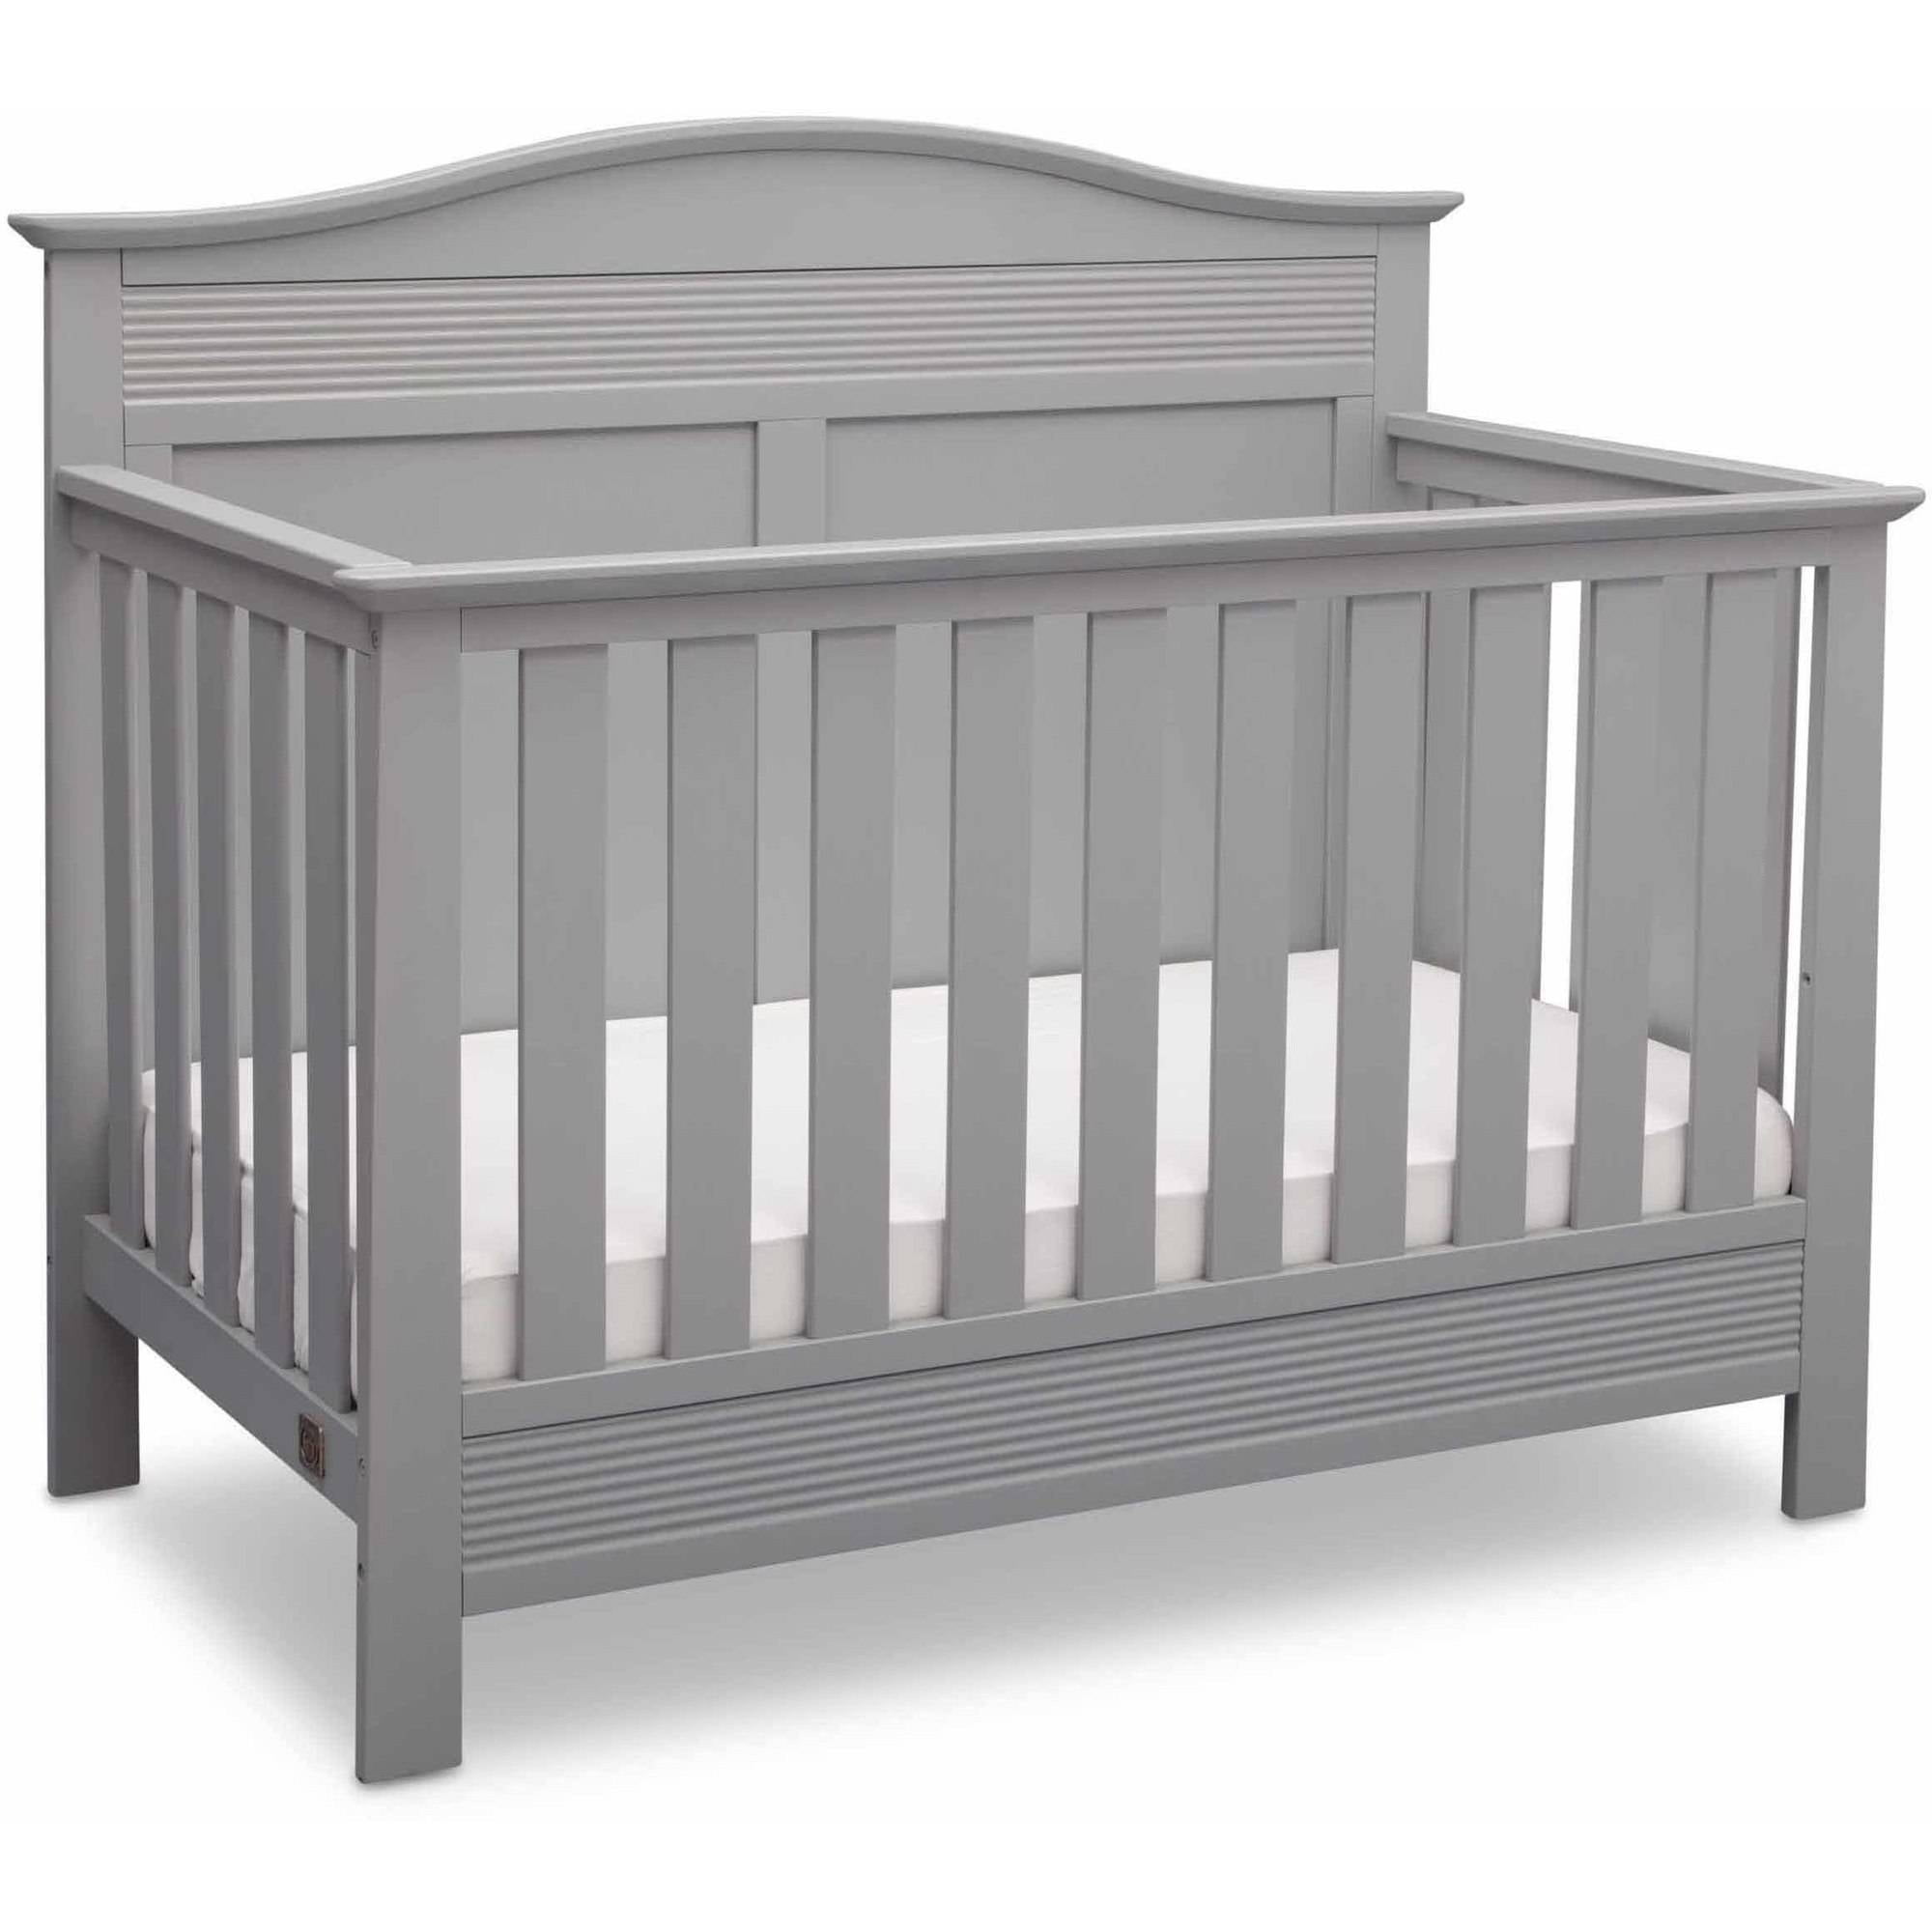 Serta Barrett 4-in-1 Convertible Baby Crib Grey 